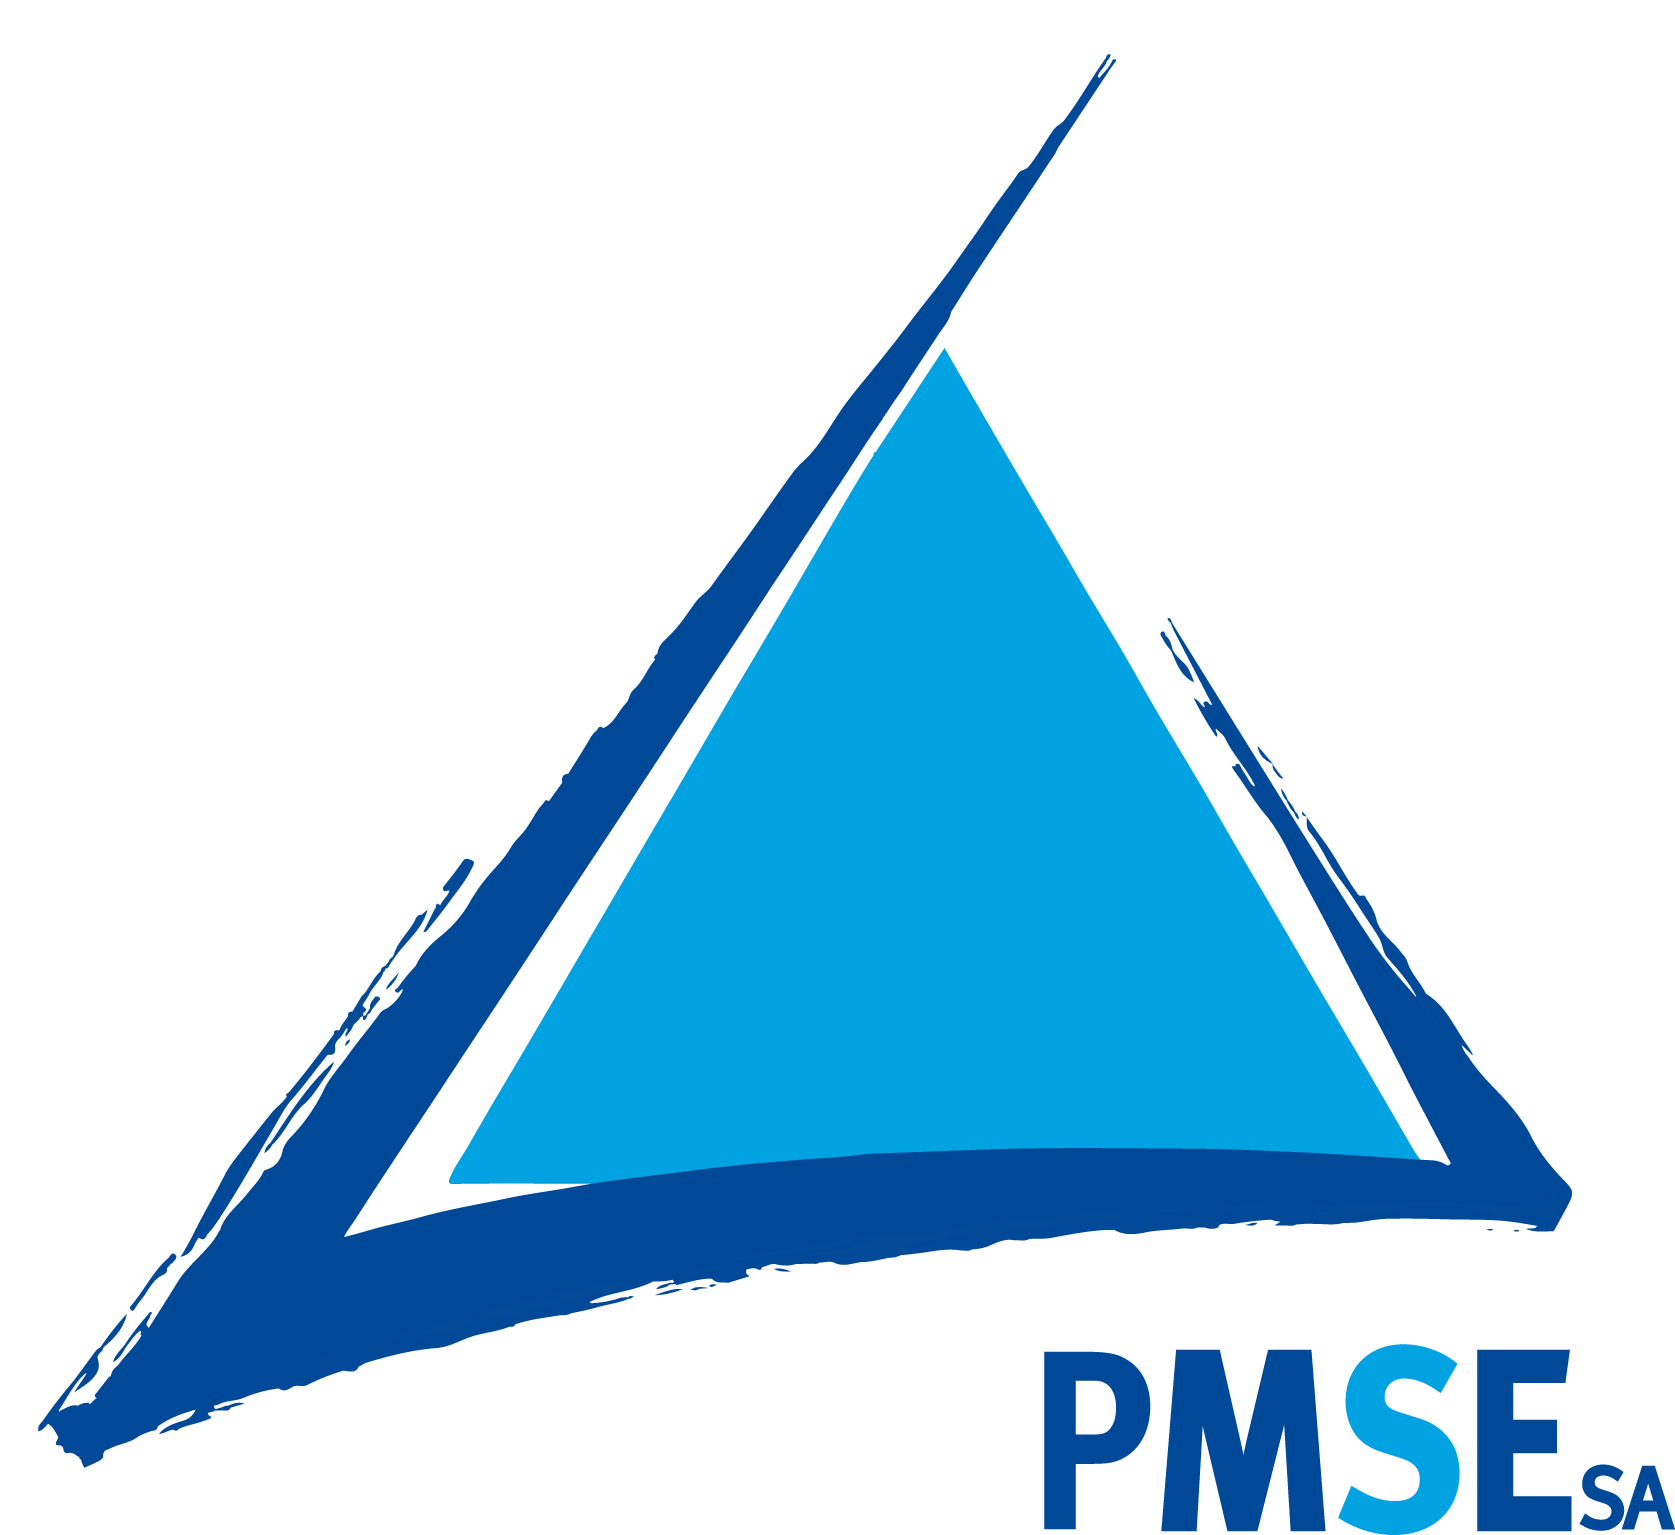 Logo PMSE